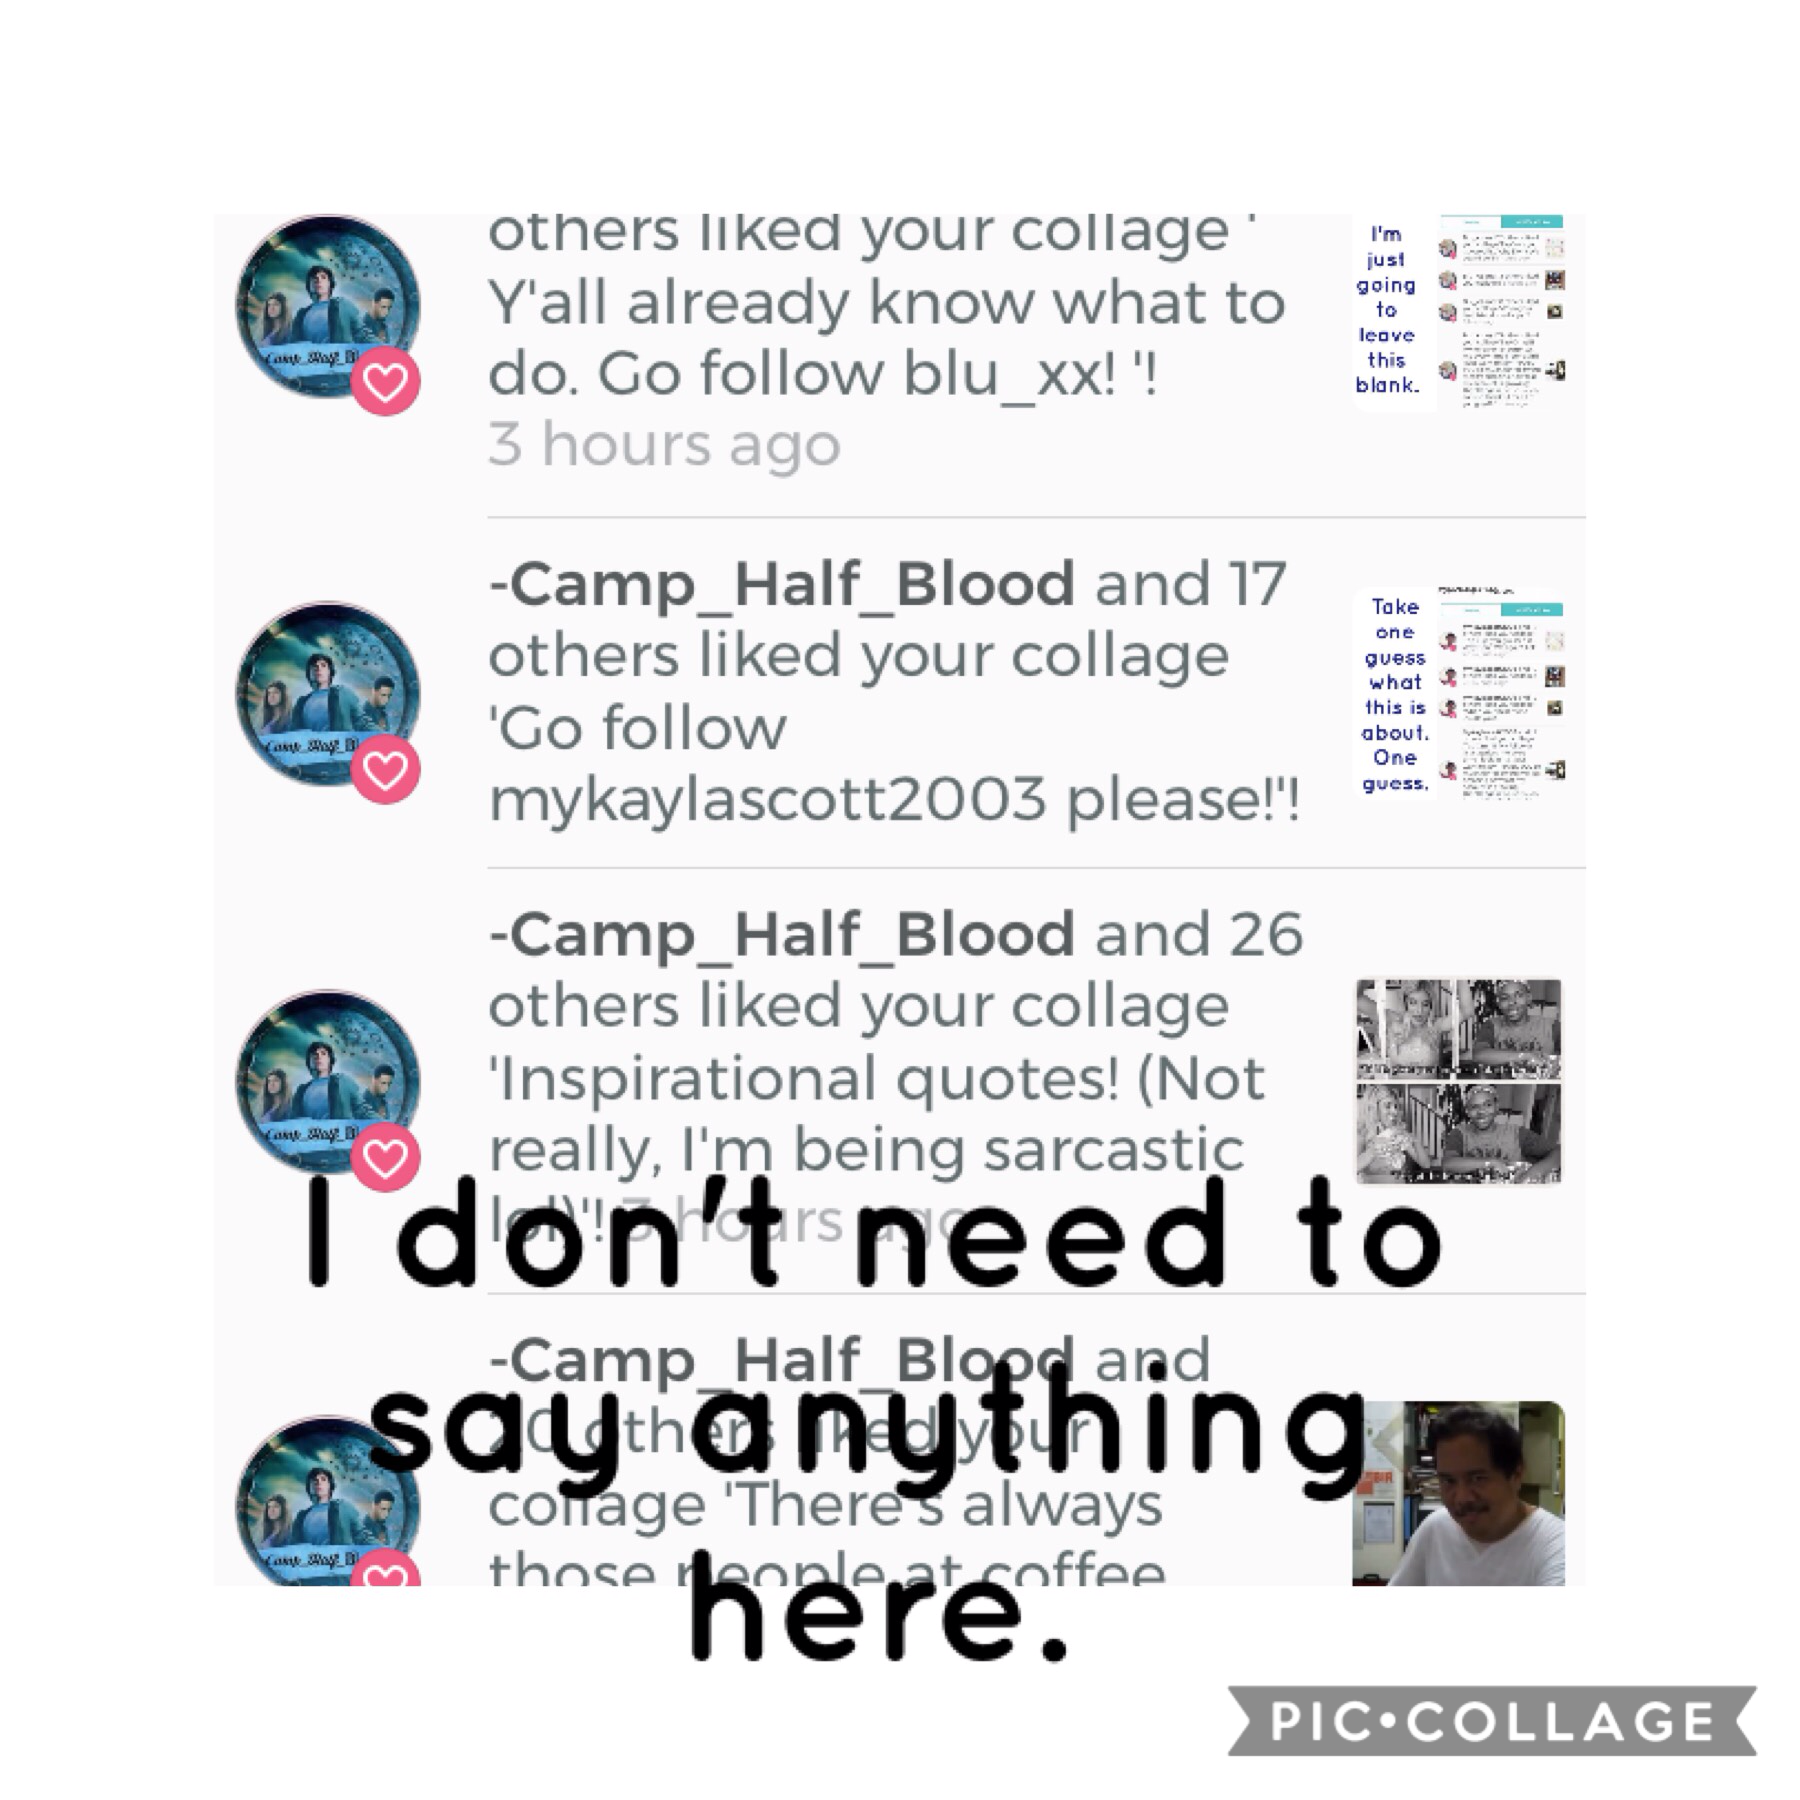 Go follow -Camp_Half_Blood please! 